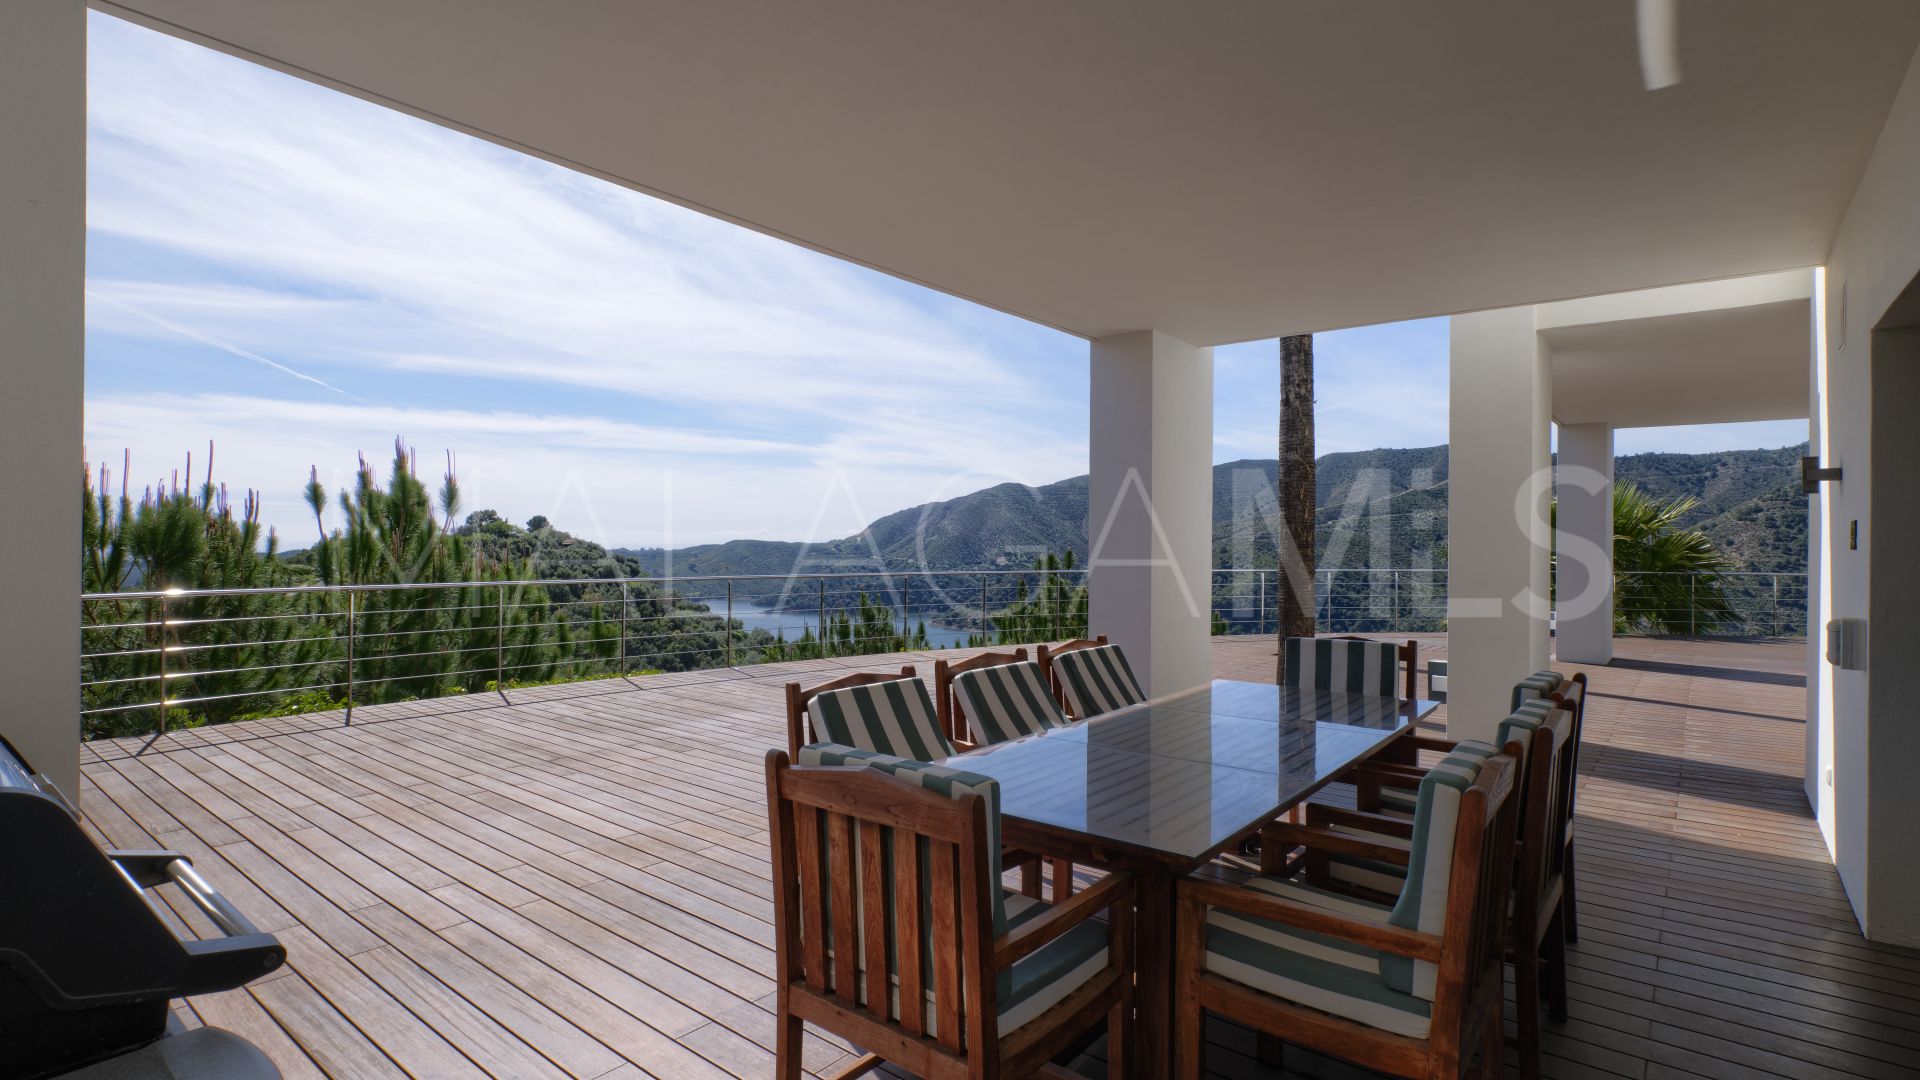 Villa for sale in Carretera de Istan with 5 bedrooms